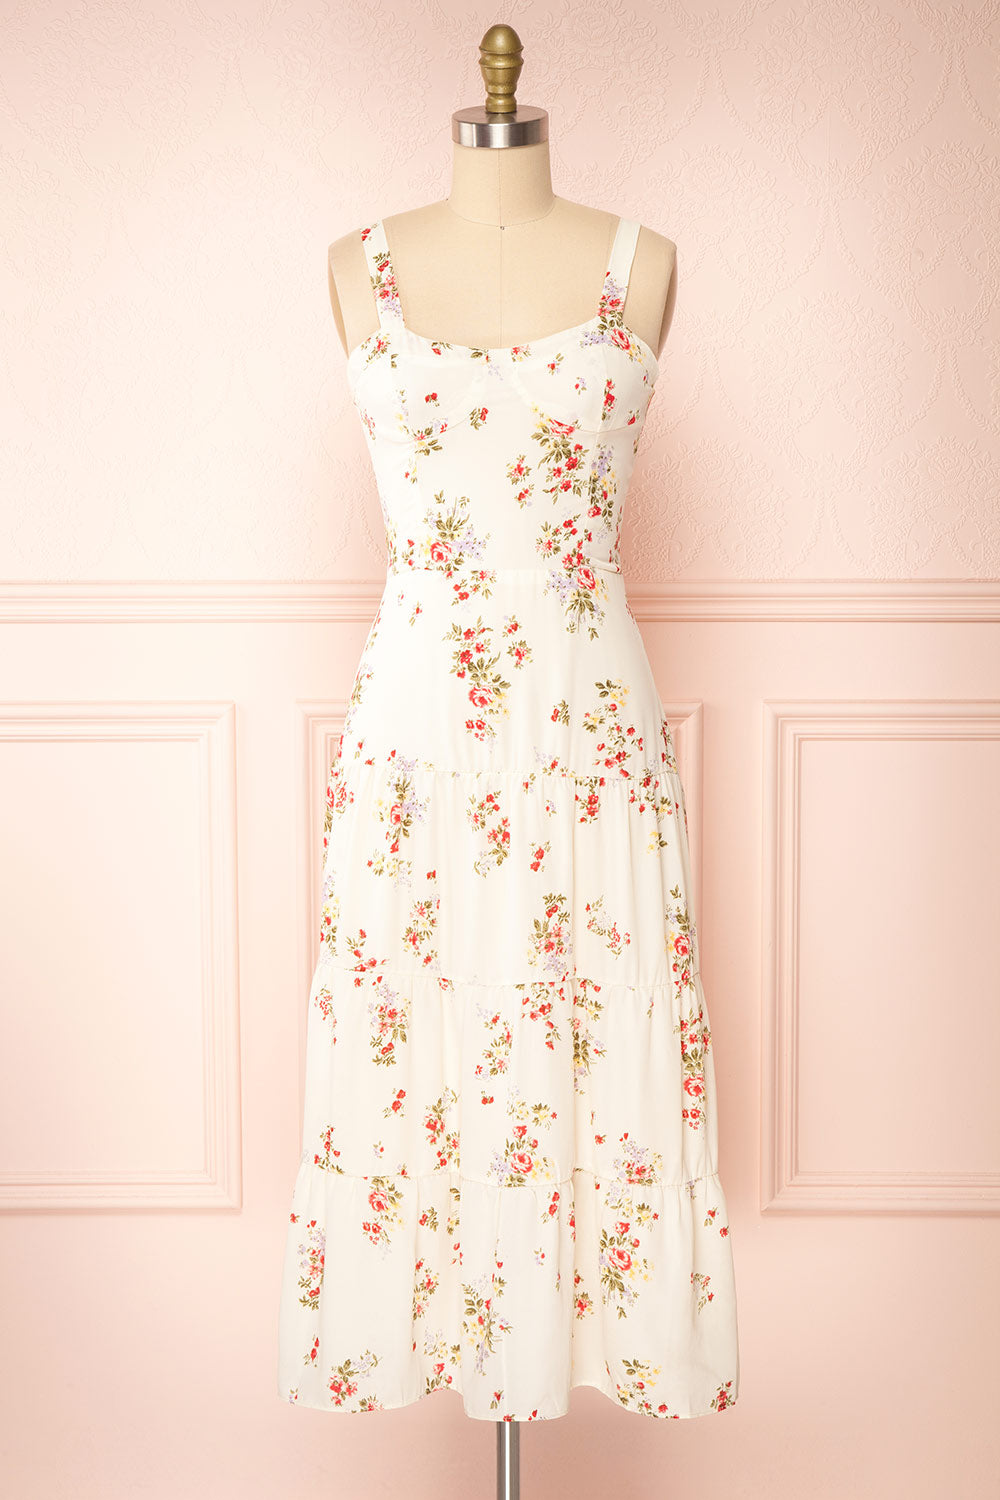 Sodalen Beige Floral Midi Dress w/ Ruffles | Boutique 1861 front view